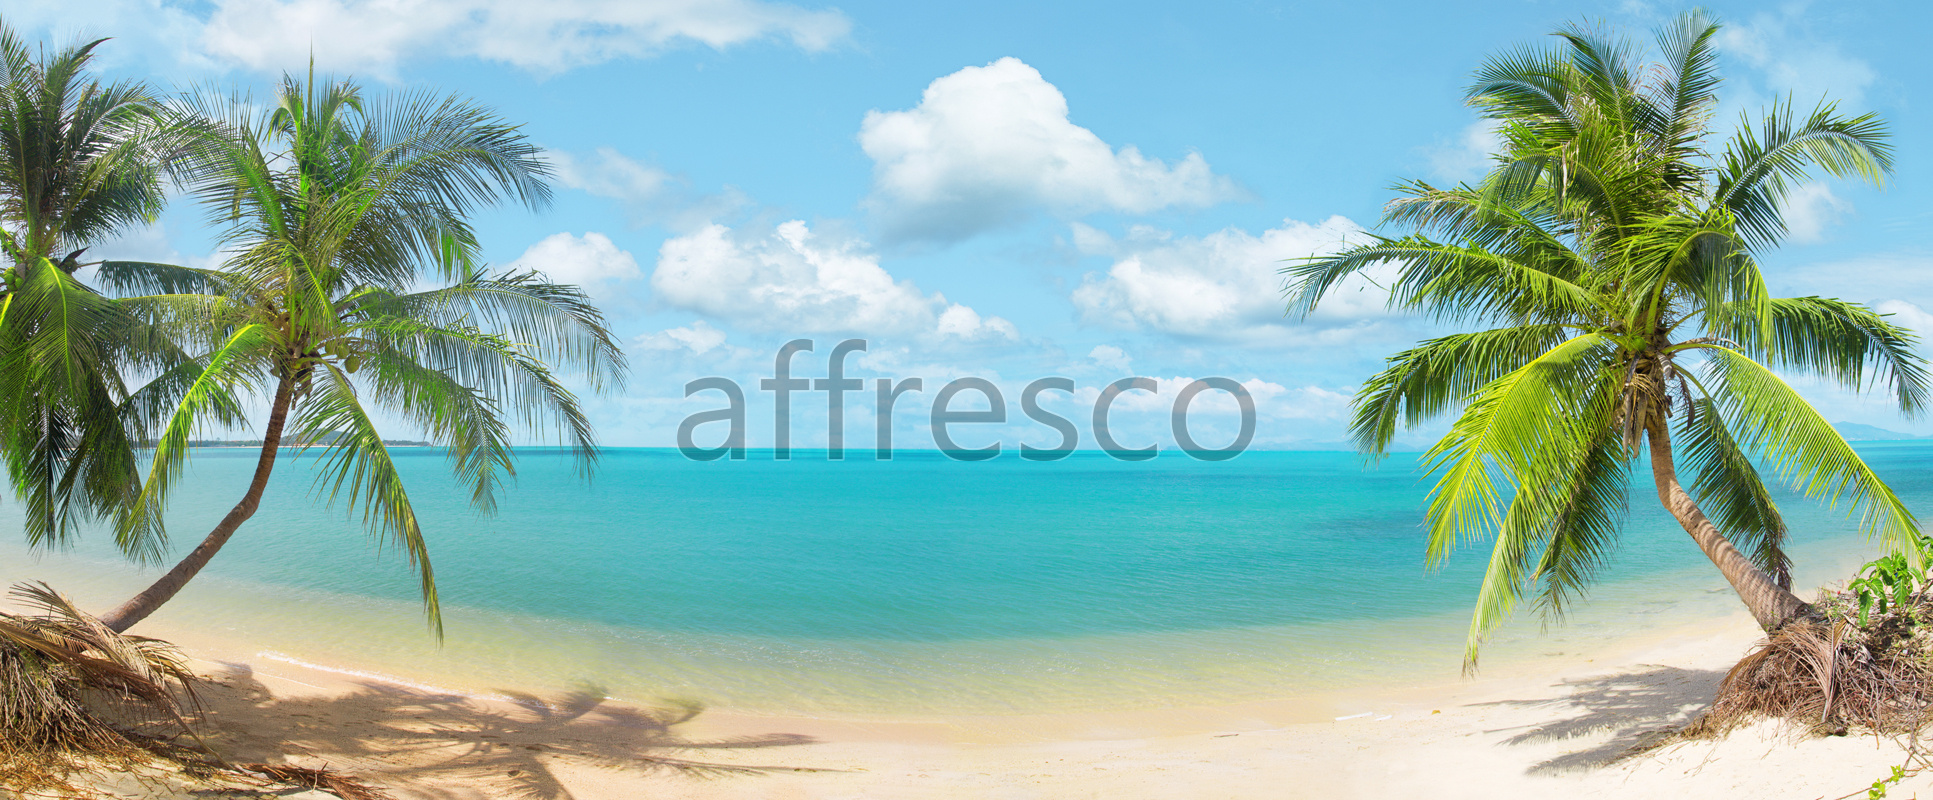 ID11021 | The best landscapes | Baunty beach | Affresco Factory